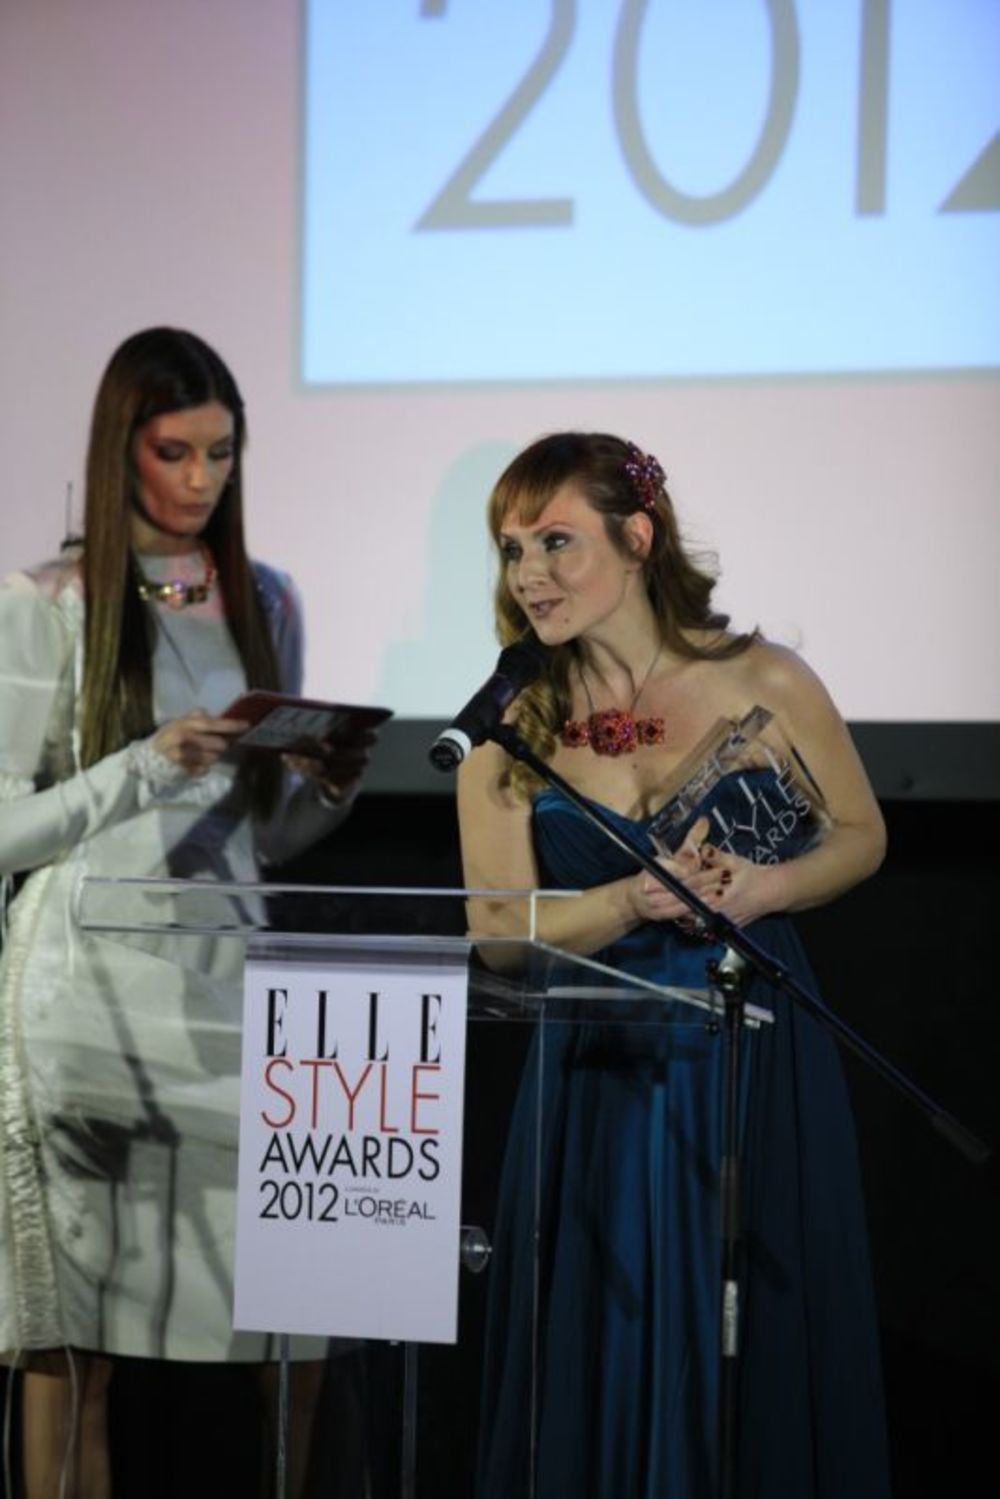 Magazin ELLE dodelio je prvi put u Srbiji renomirana svetska priznanja za prepoznatljiv stil - ELLE Style awards 2012, u saradnji sa L’Oréal Paris. U ekskluzivnoj sali Jugoslovenske kinoteke, koja je premijerno otvorena, ELLE Style awards 2012 dodeljene su naj